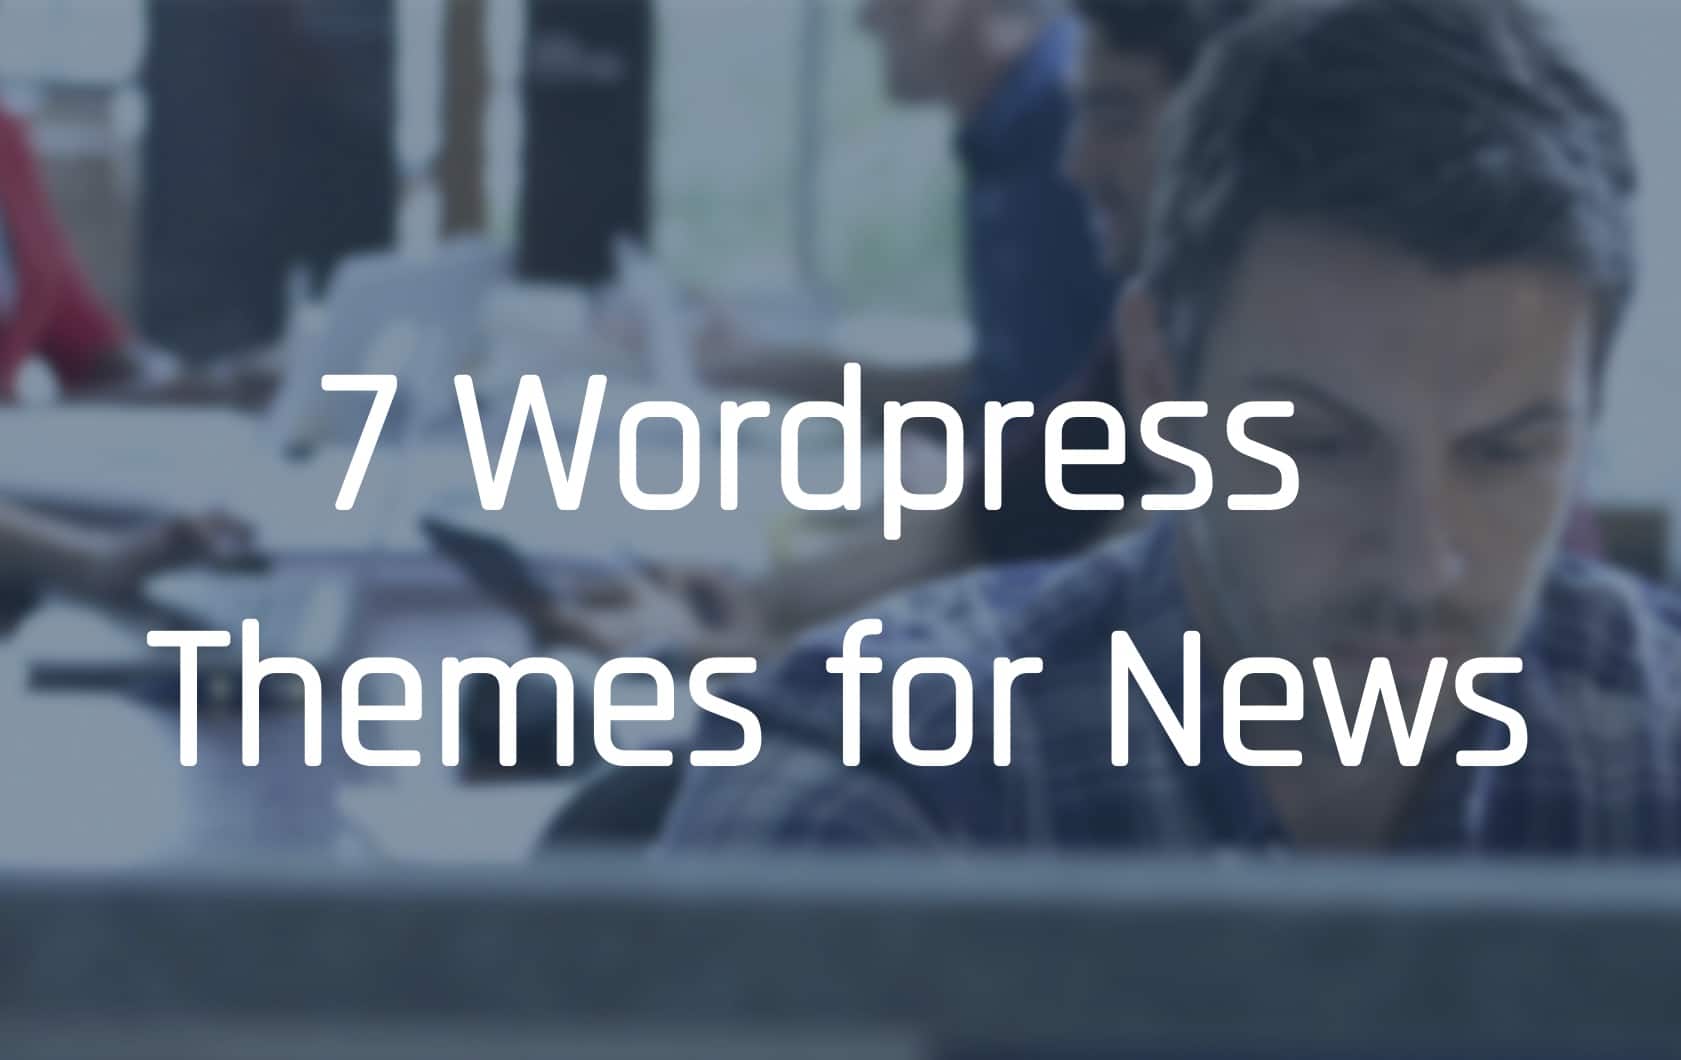 7 Wordpress Themes for News